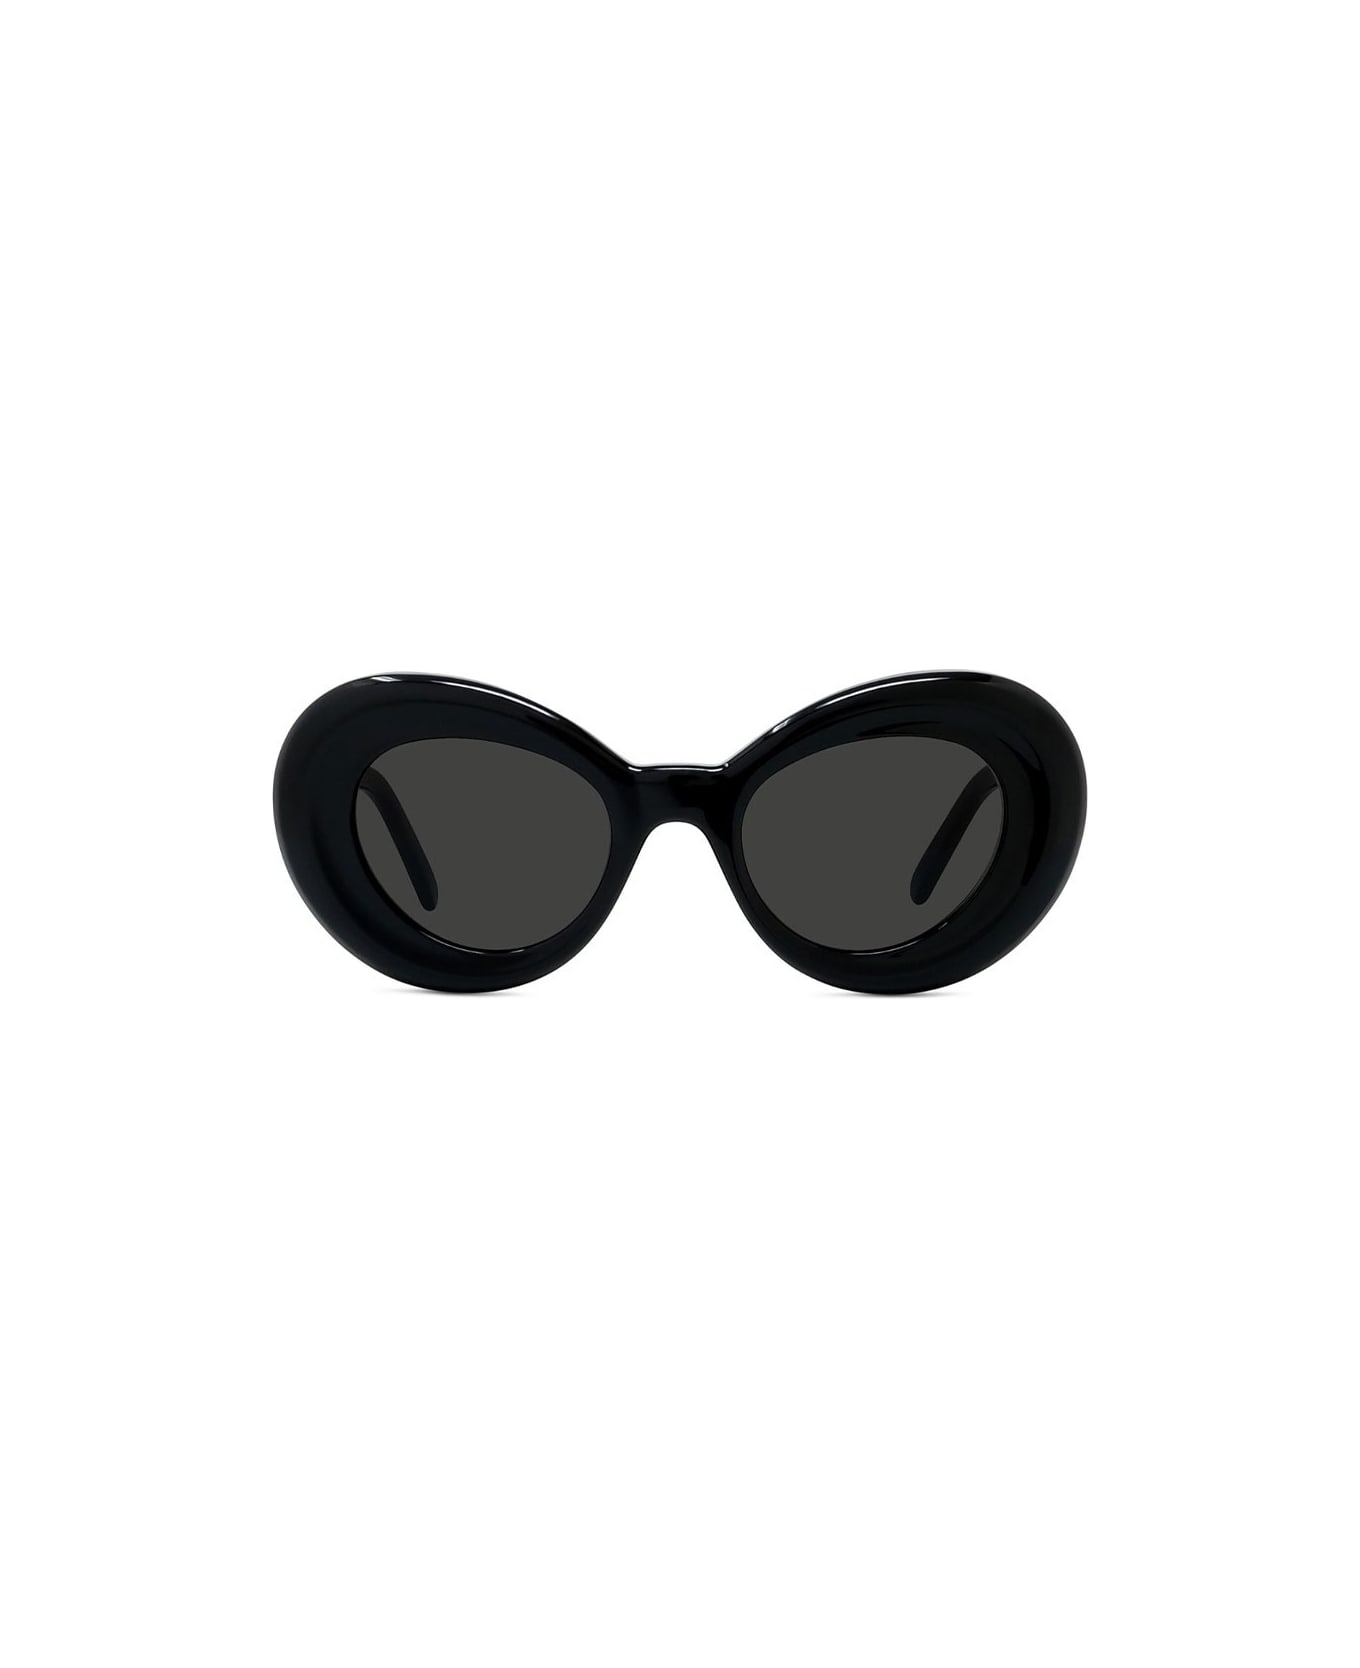 Loewe Sunglasses - Nero/Grigio サングラス